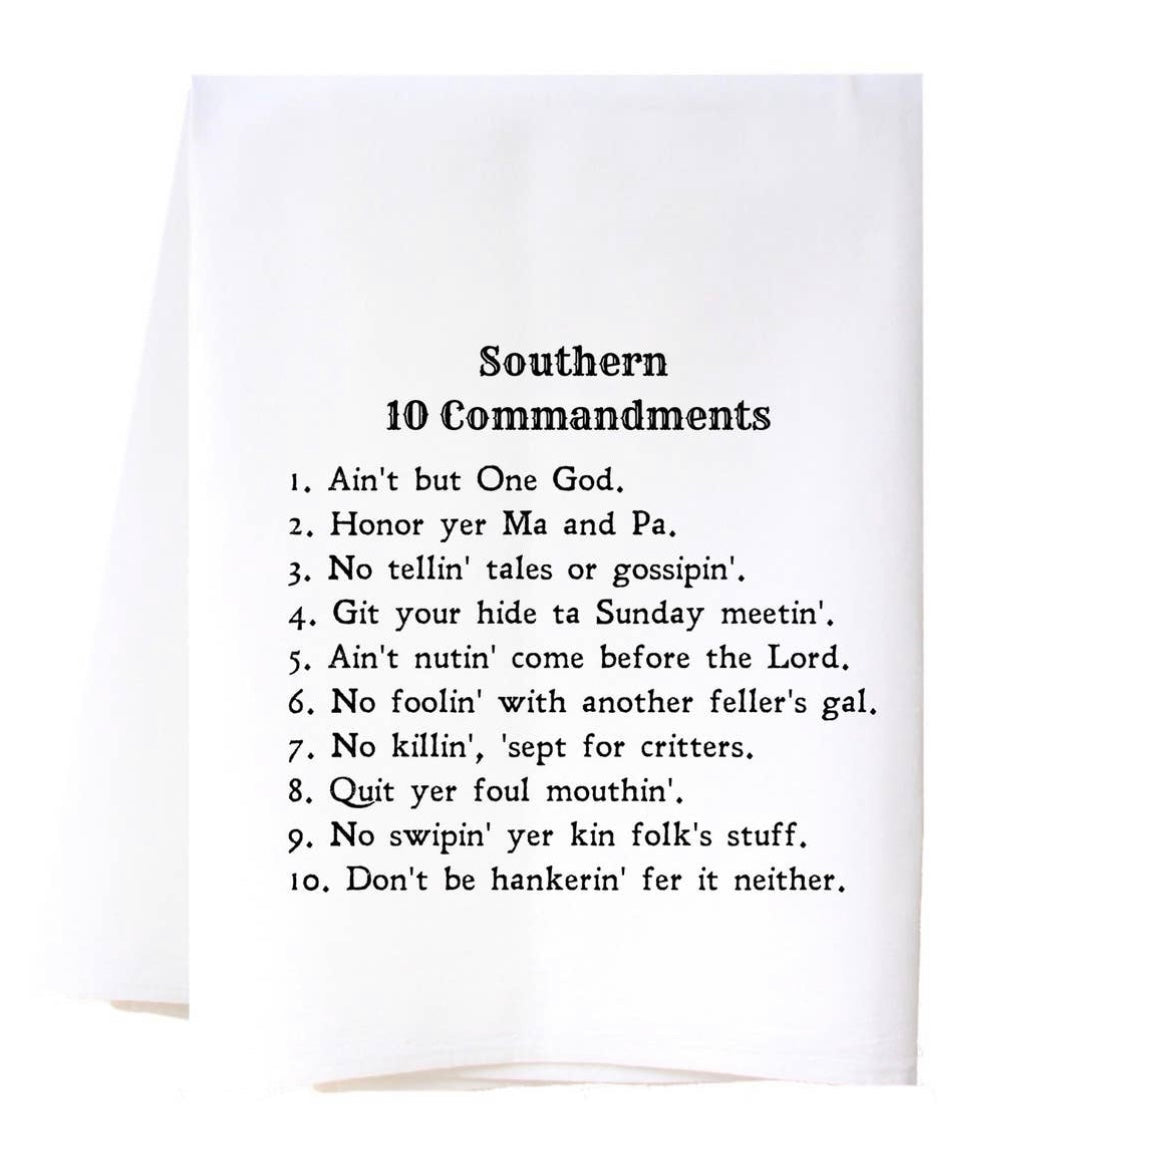 Southern 10 Commandments